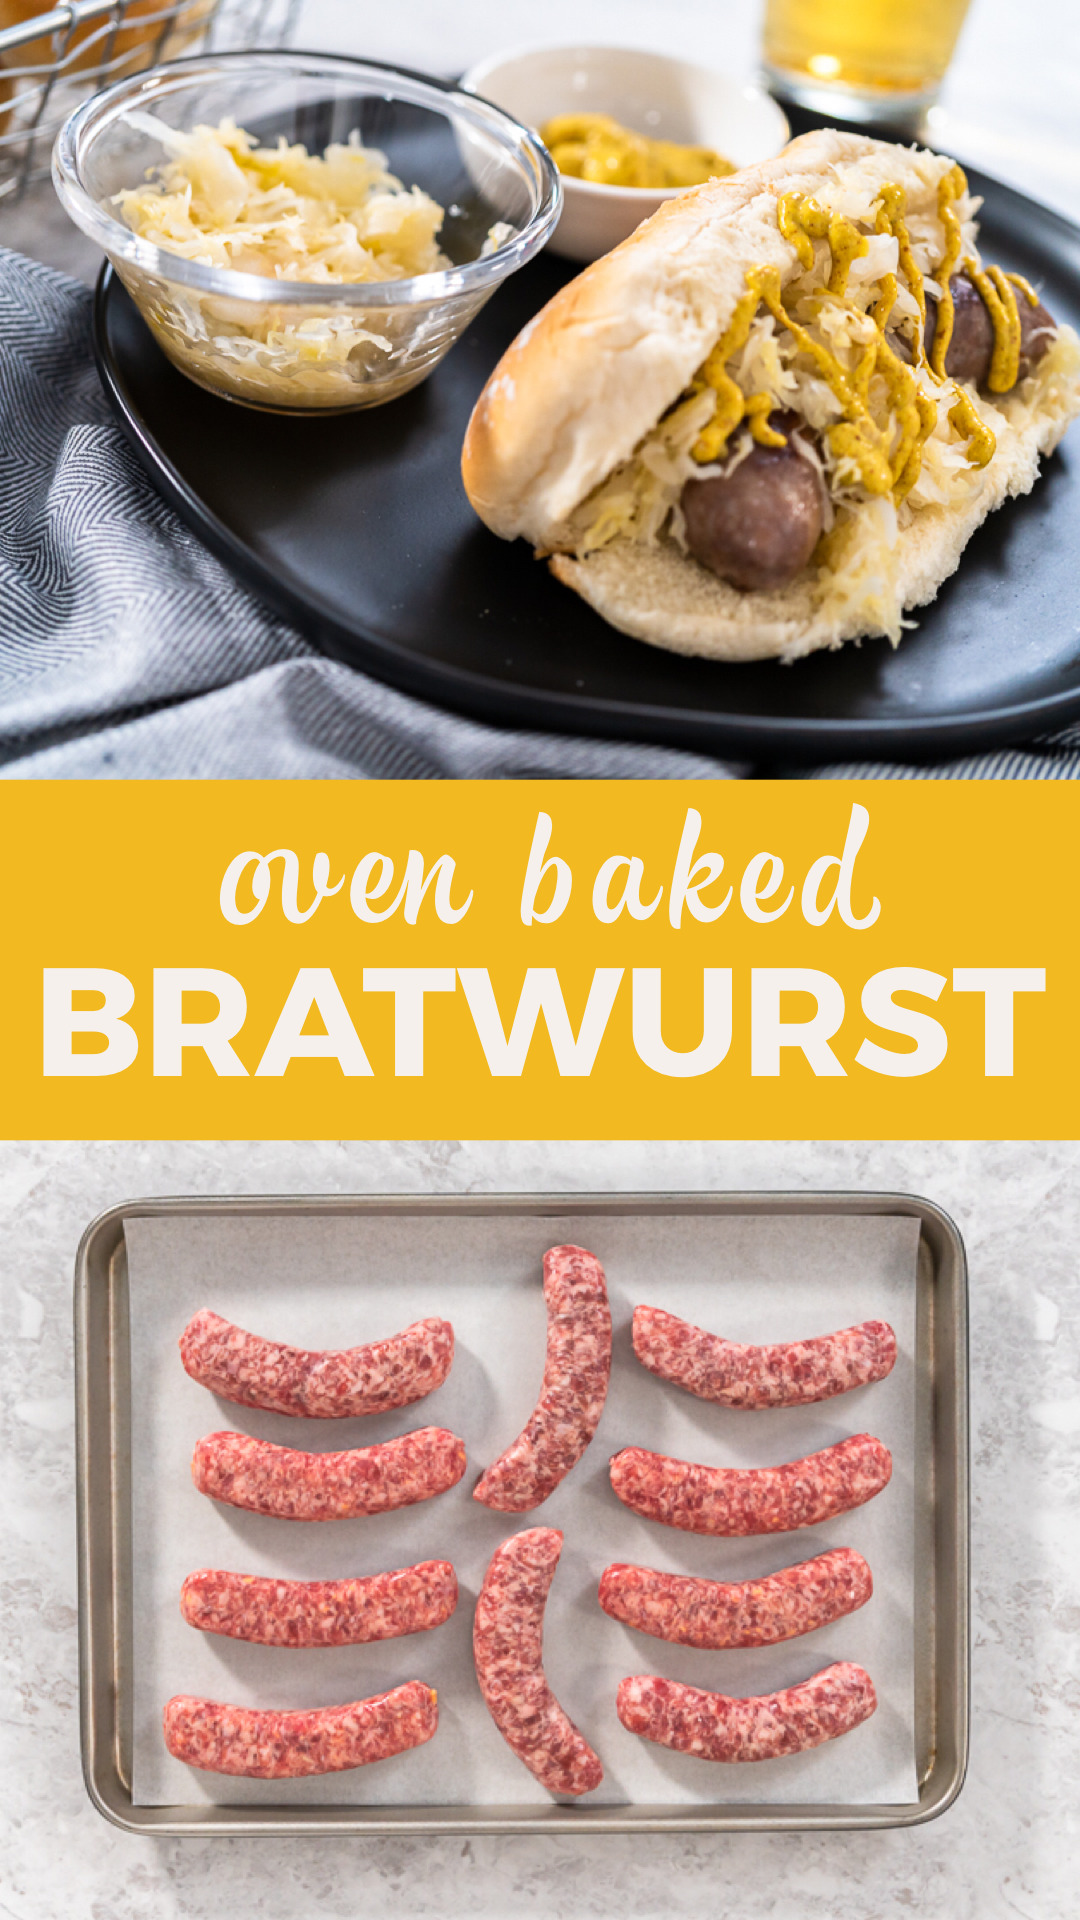 Oven baked bratwursts